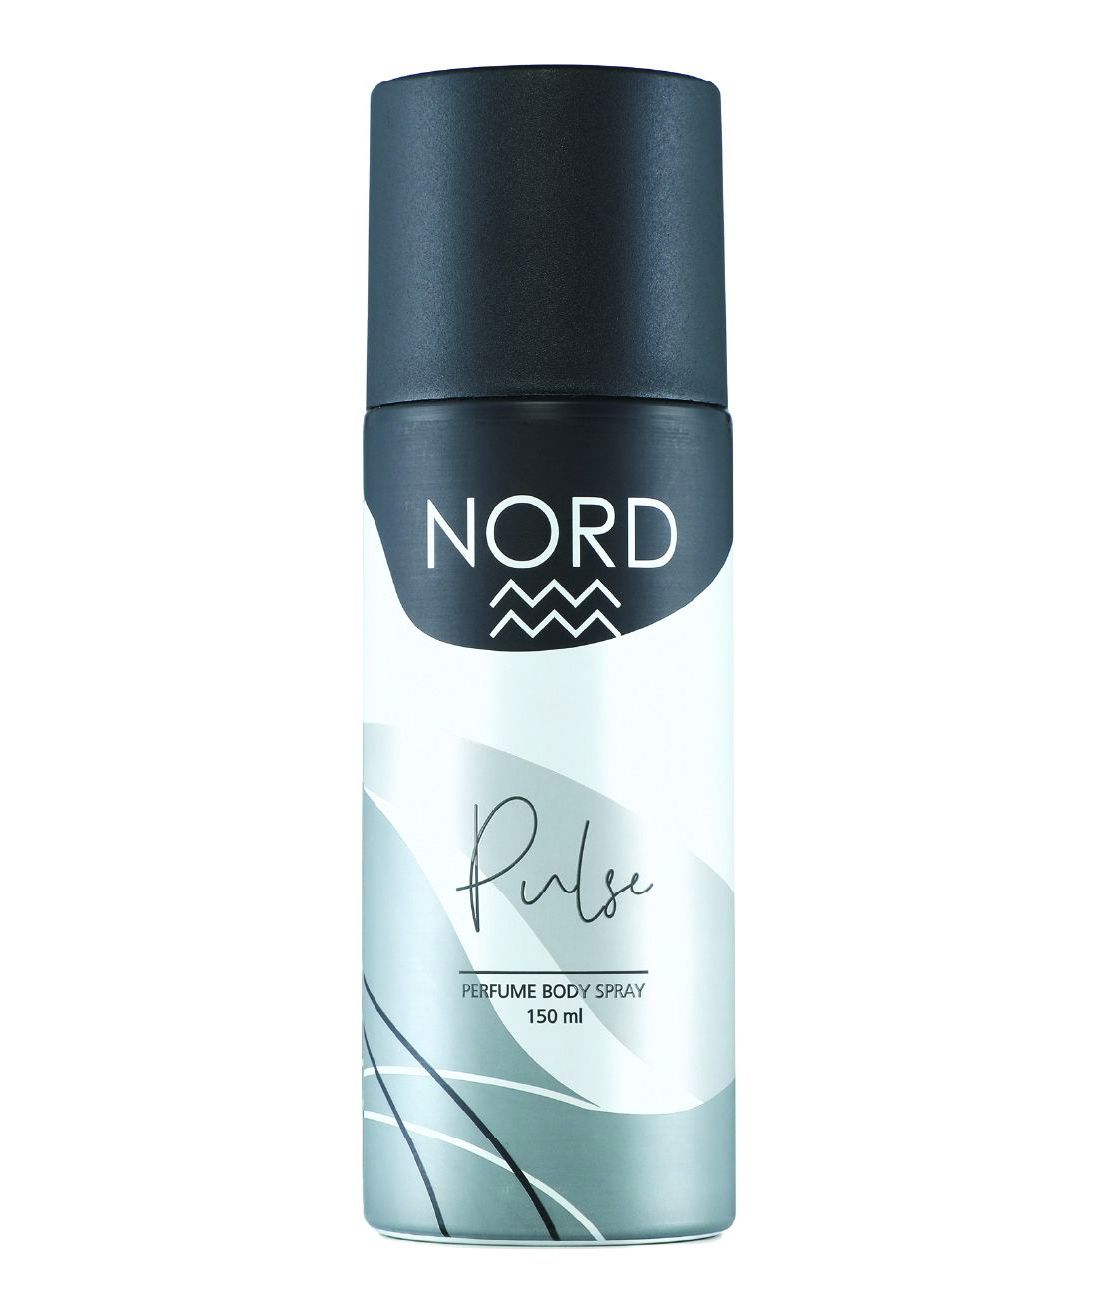     			NORD - Pulse Deodorant Spray for Men 150 ml ( Pack of 1 )